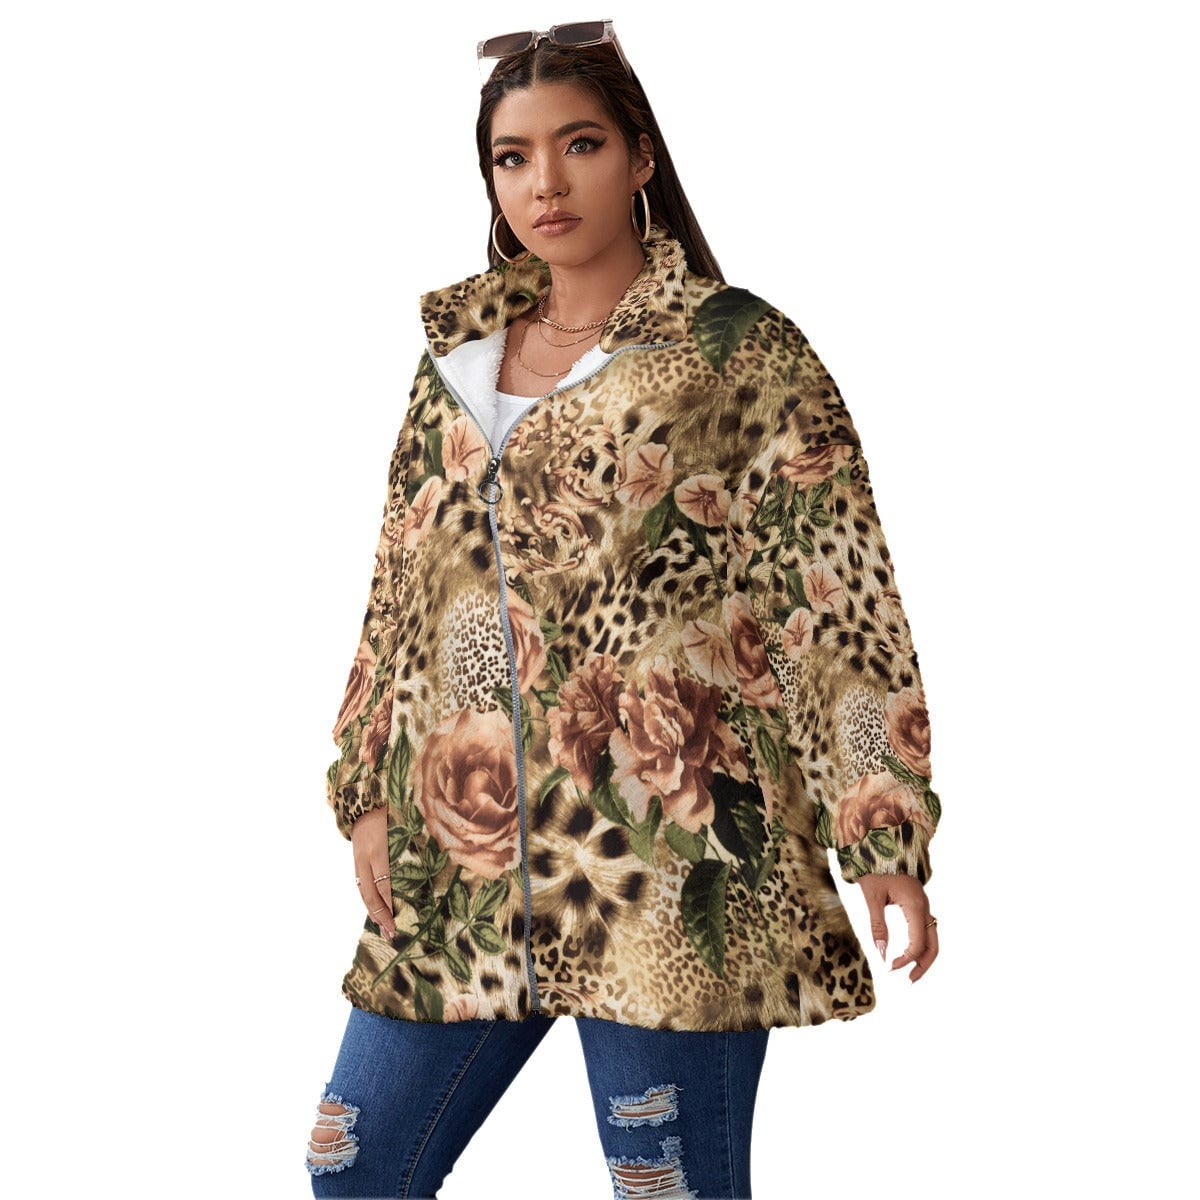 Fashion Roses and Leopard Women’s Borg Fleece Oversize Jacket